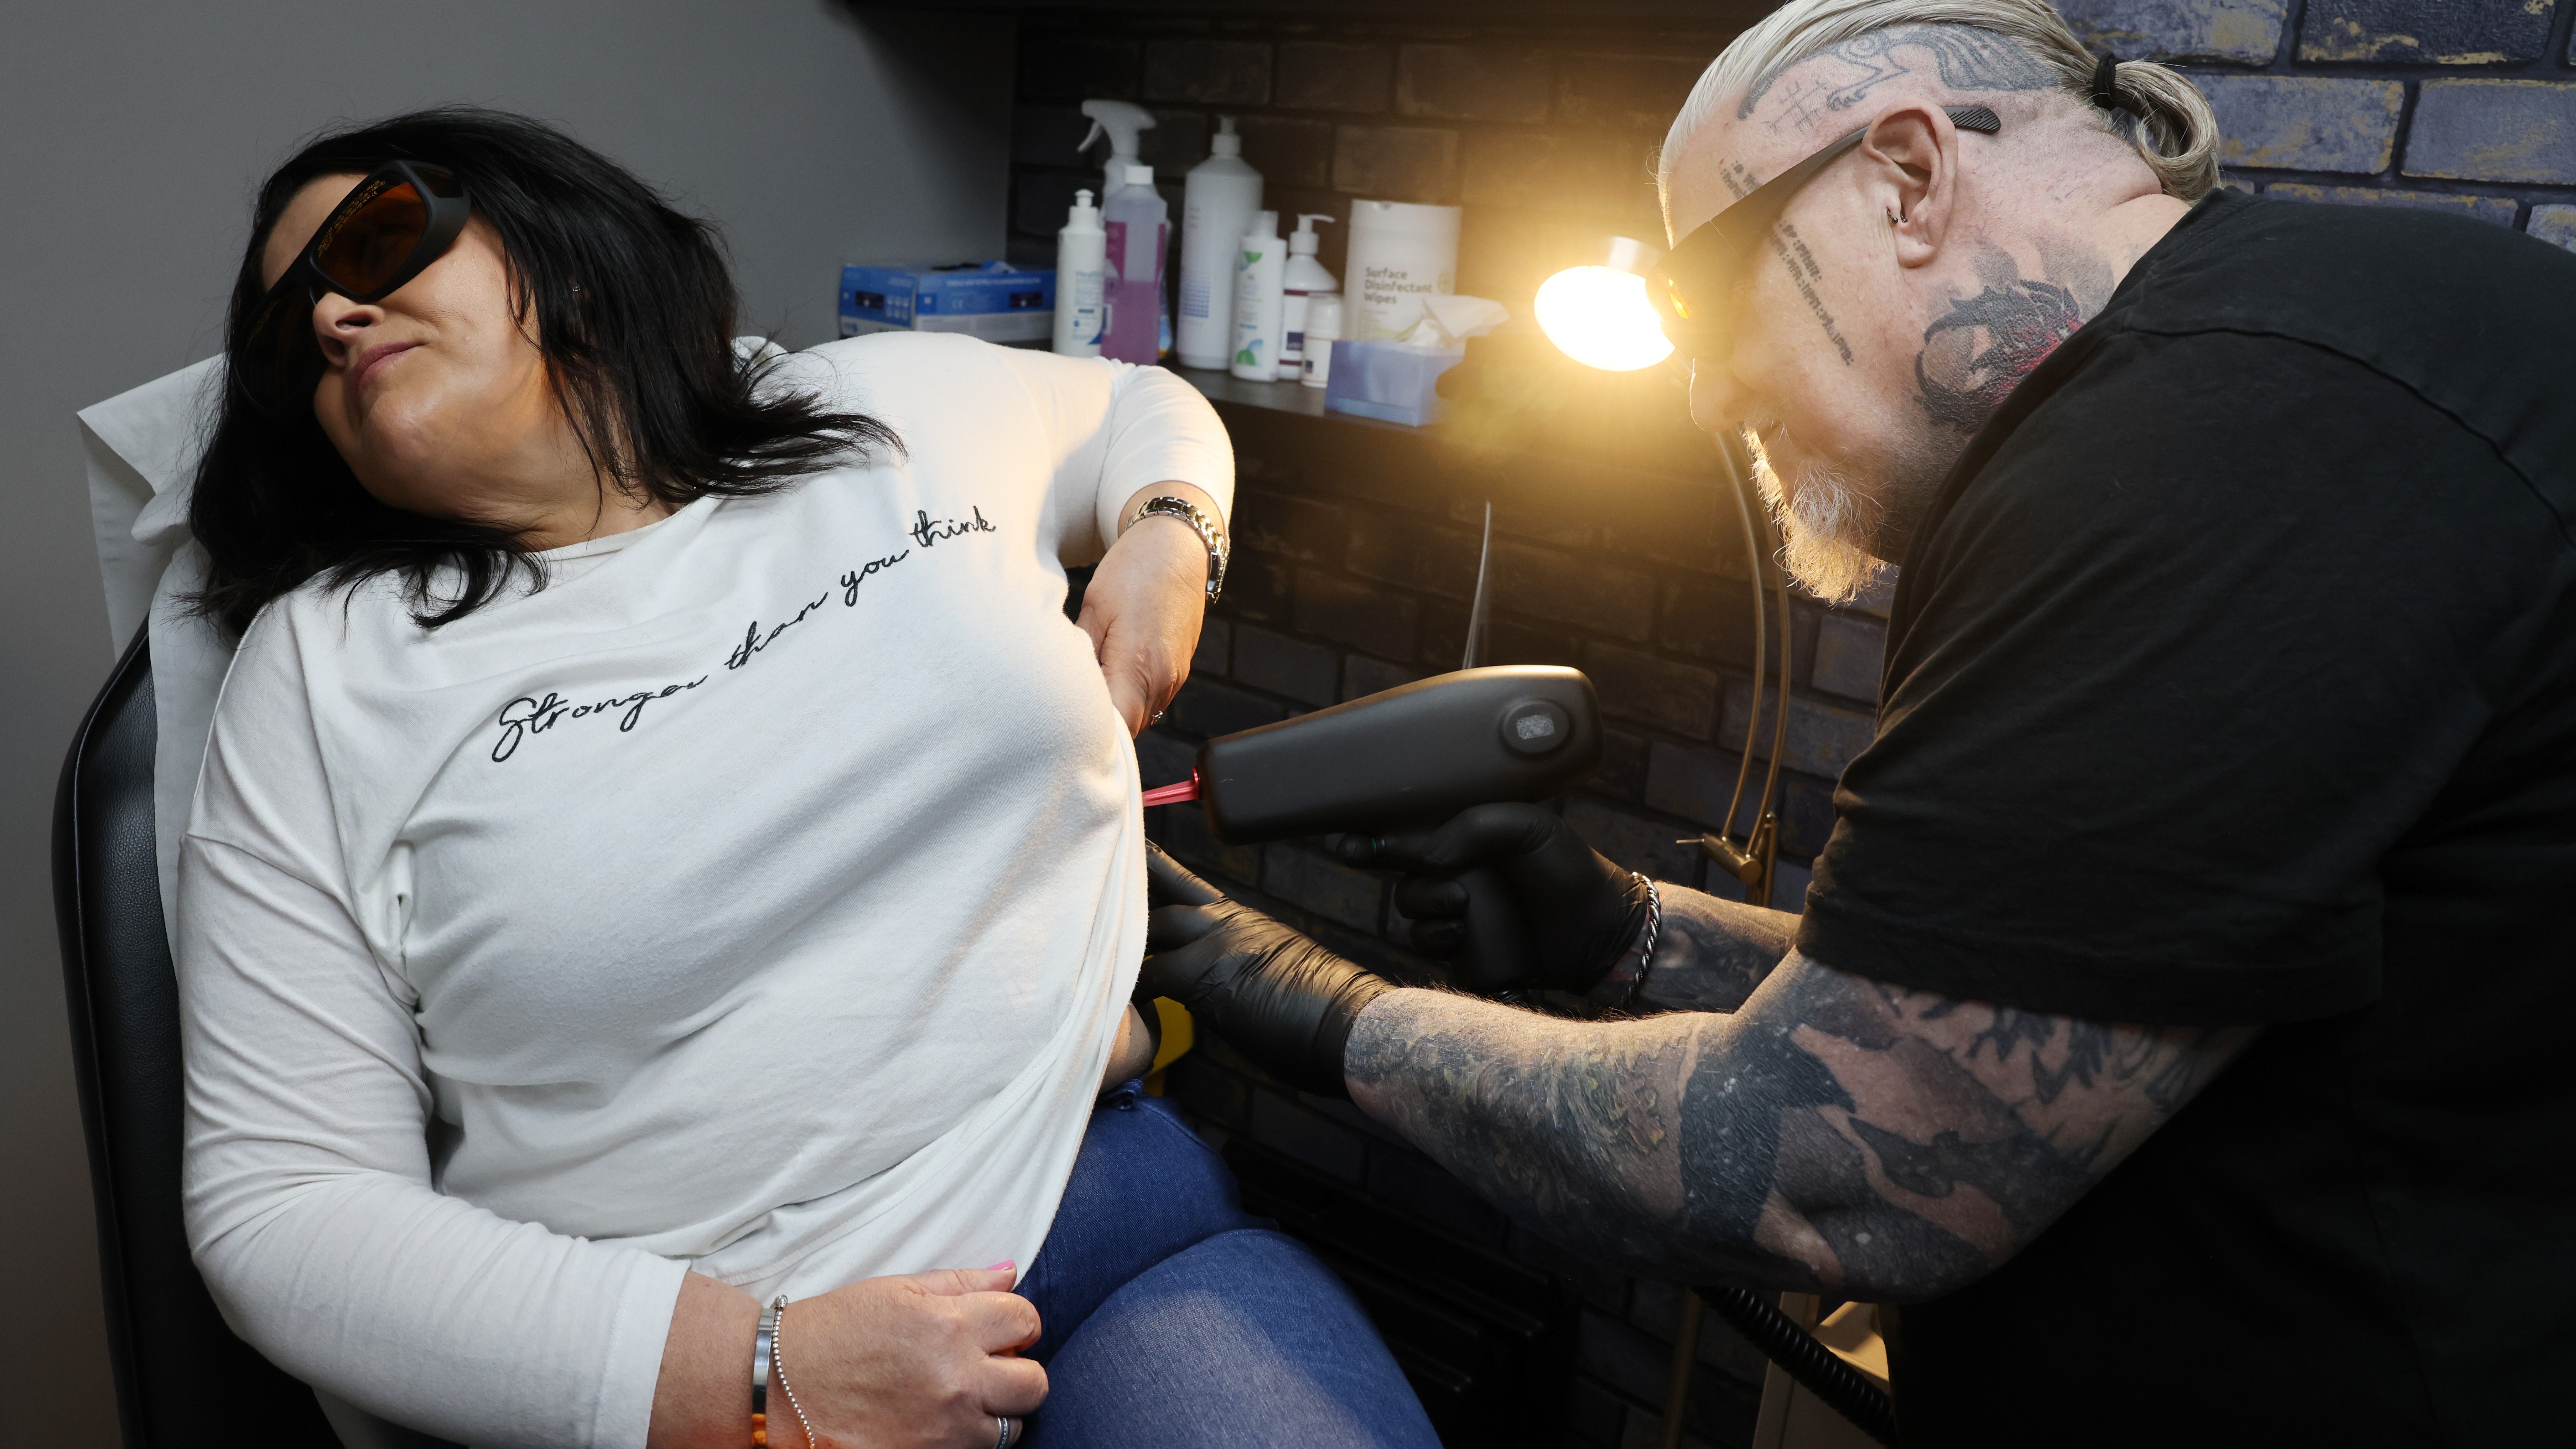 Syracuse tattoo studio raises money for American Cancer Society -  syracuse.com